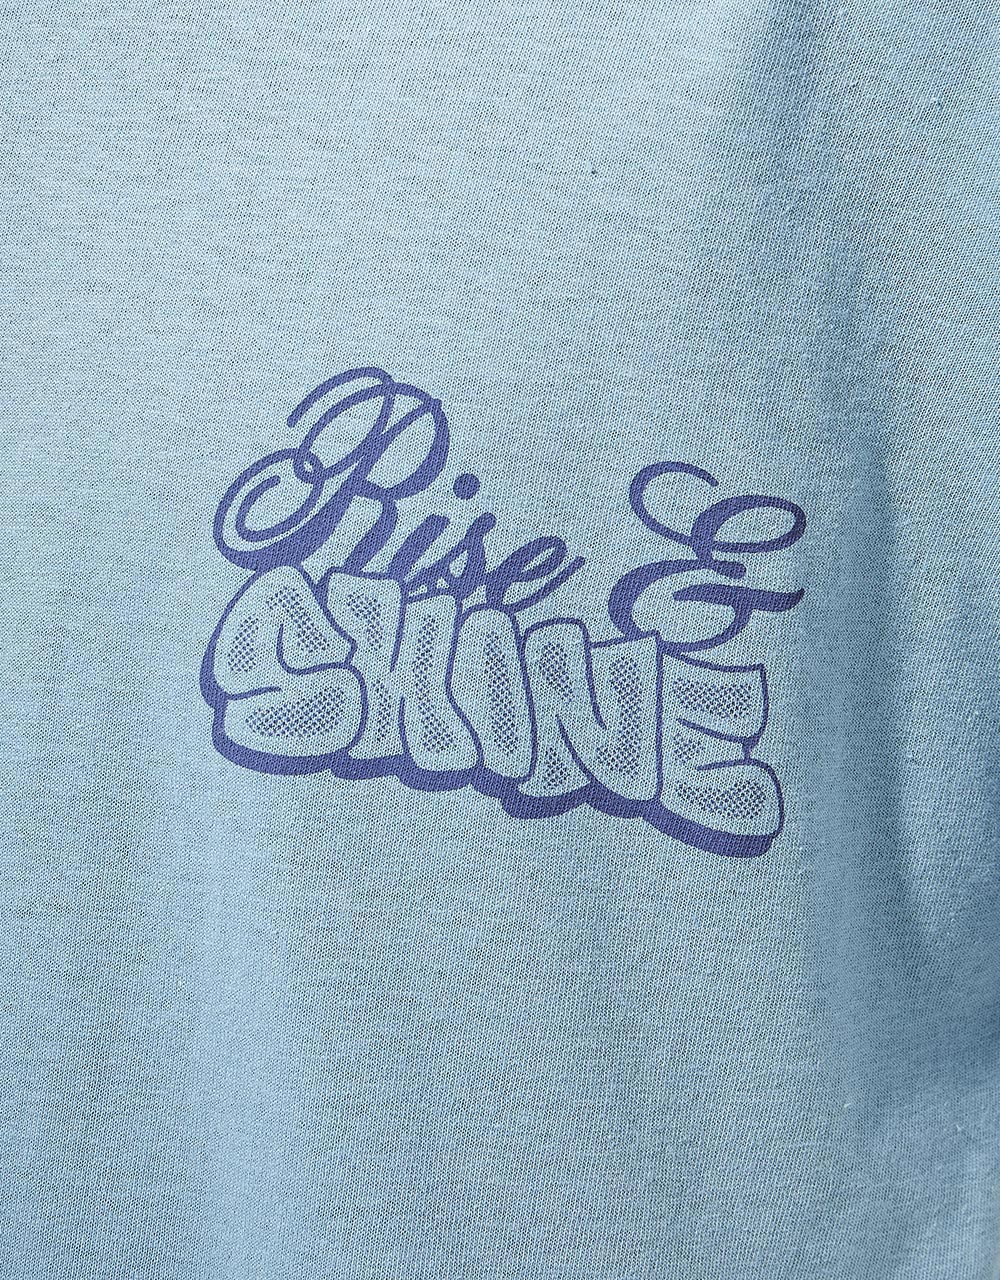 Route One Rise & Shine T-Shirt - Stone Blue